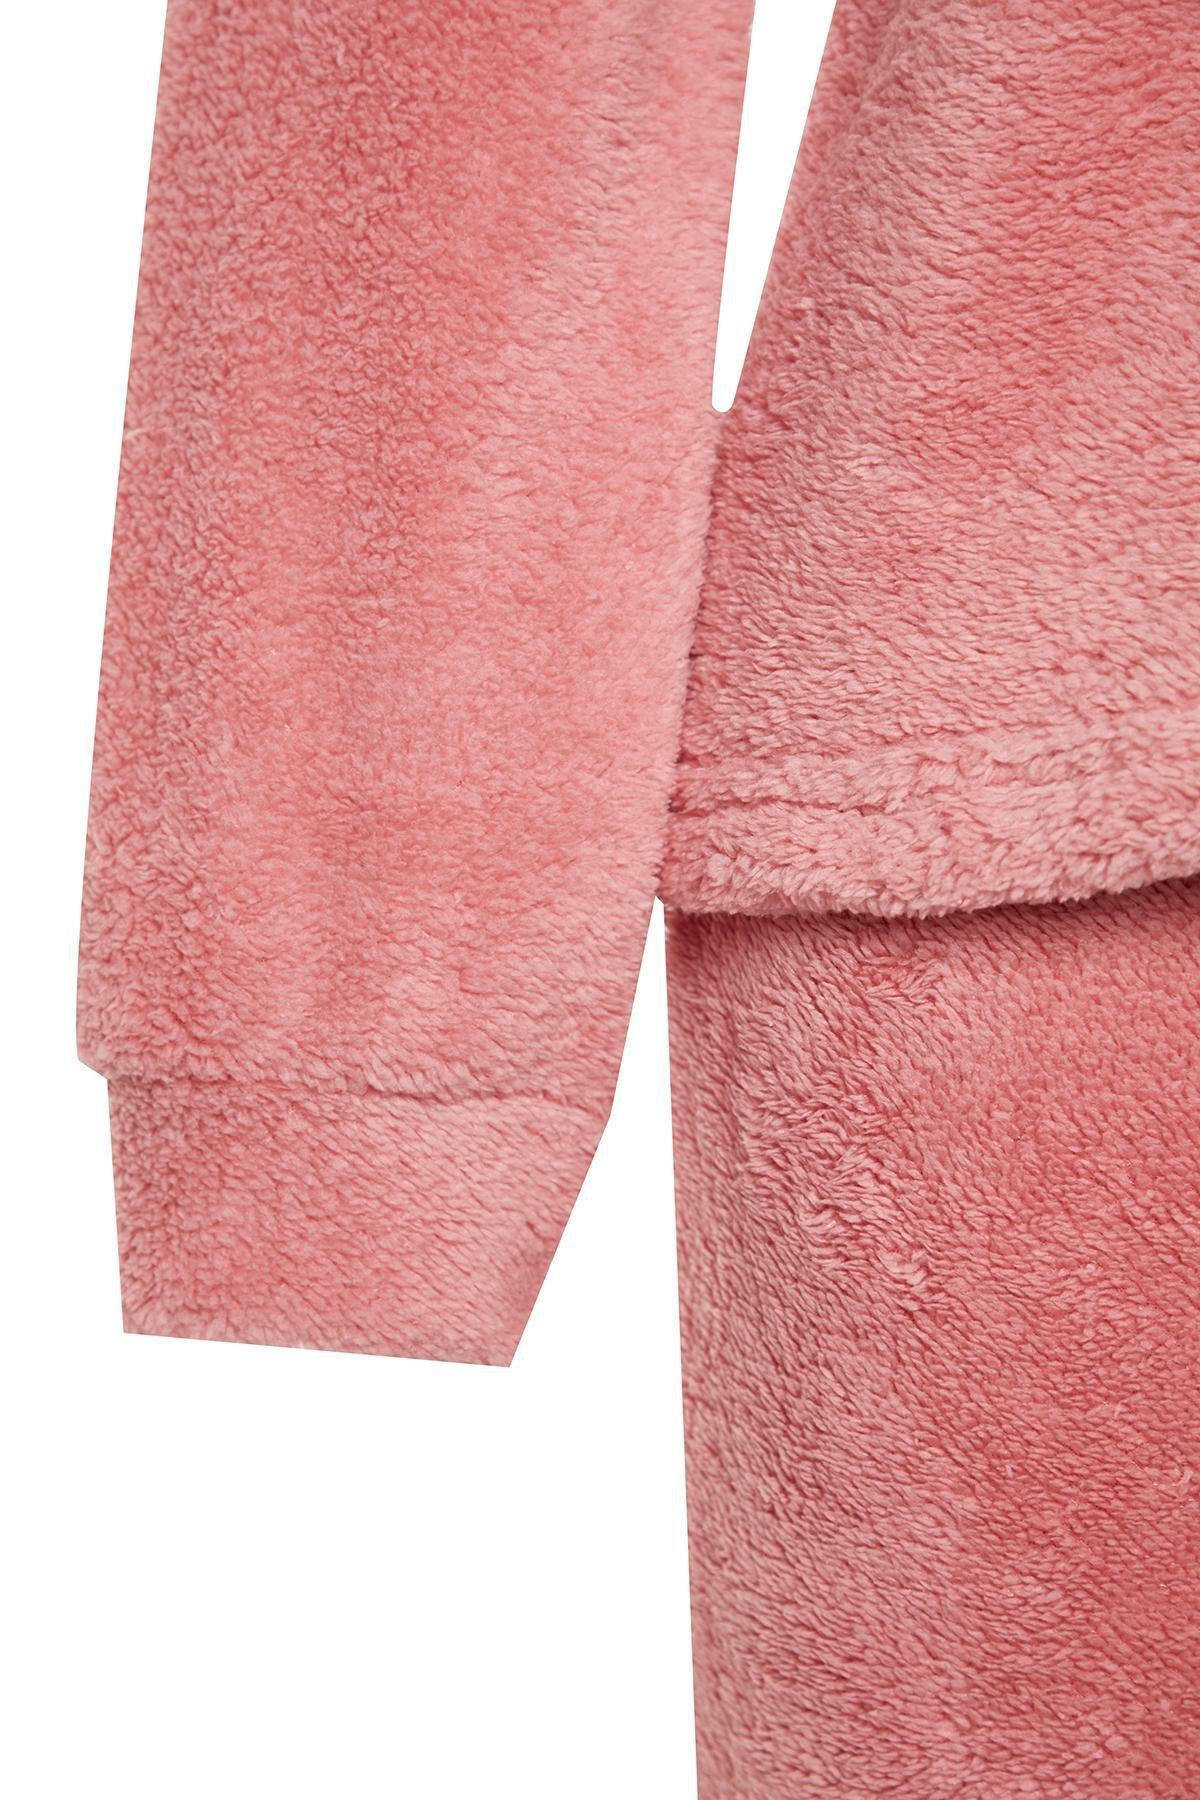 Trendyol - Pink Knitted Pyjamas Set
